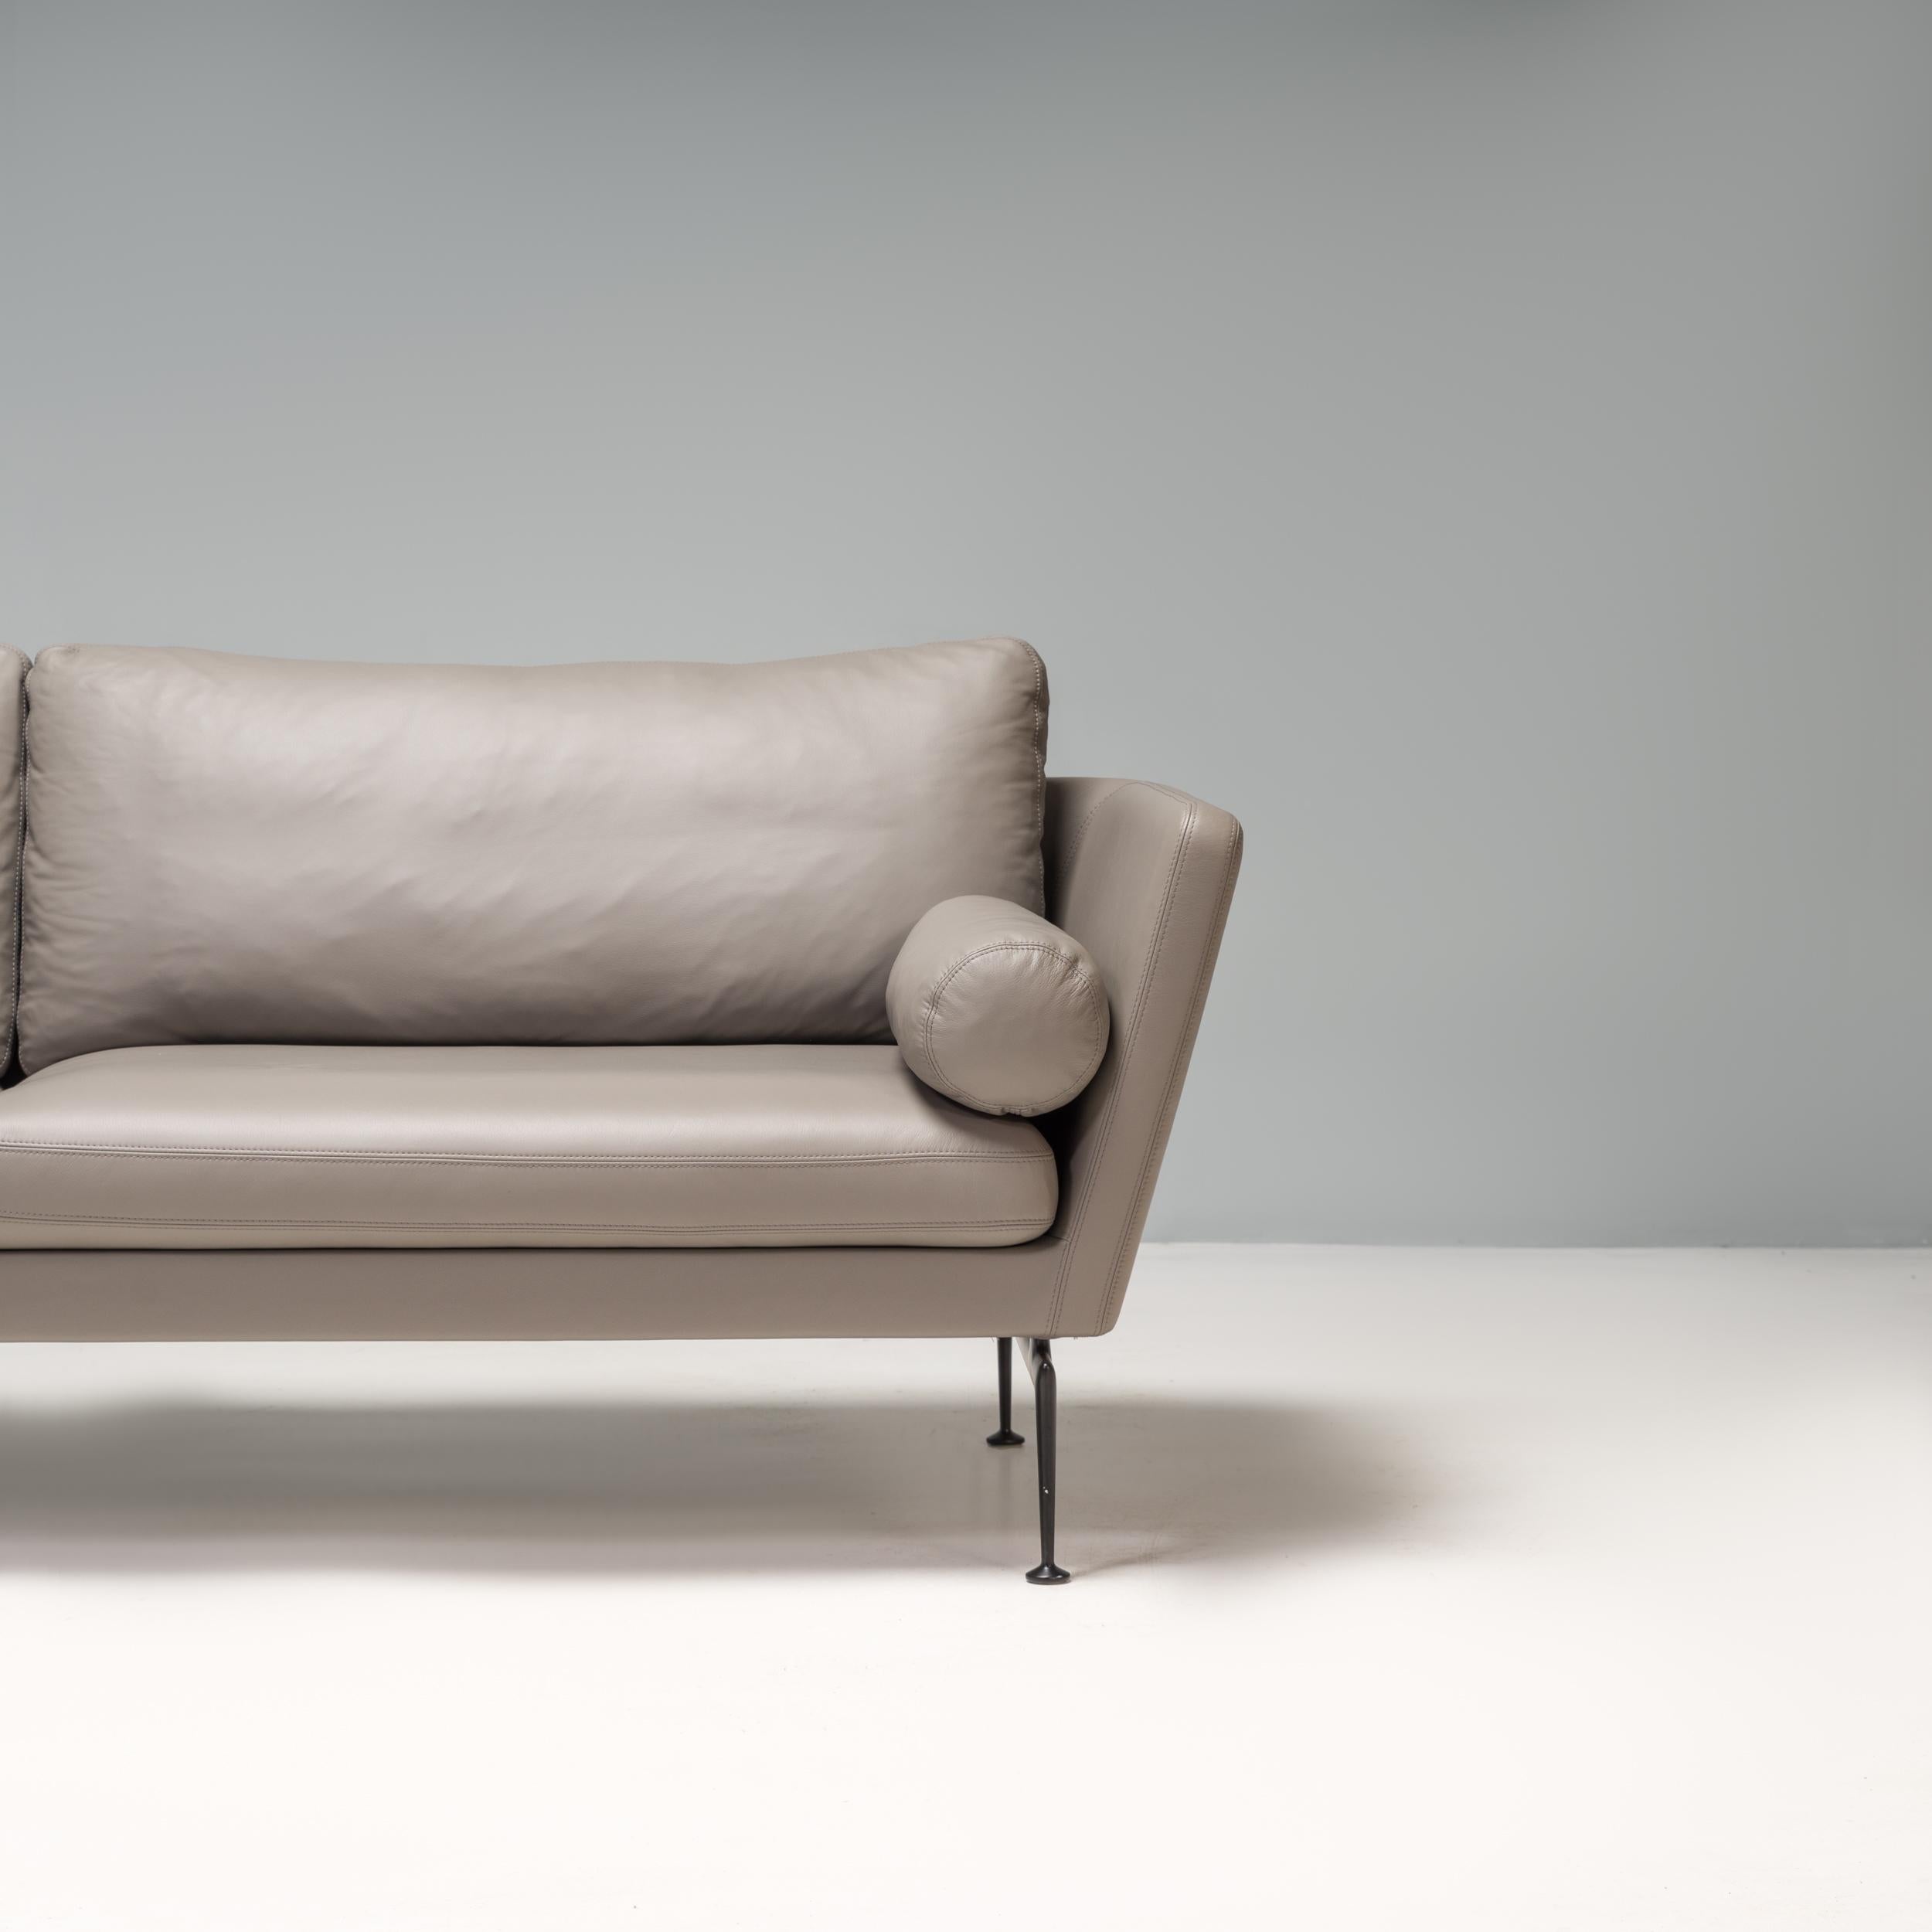 Antonio Citterio für Vitra, dreisitziges Suita-Sofa aus grauem Leder, 2021 im Angebot 1